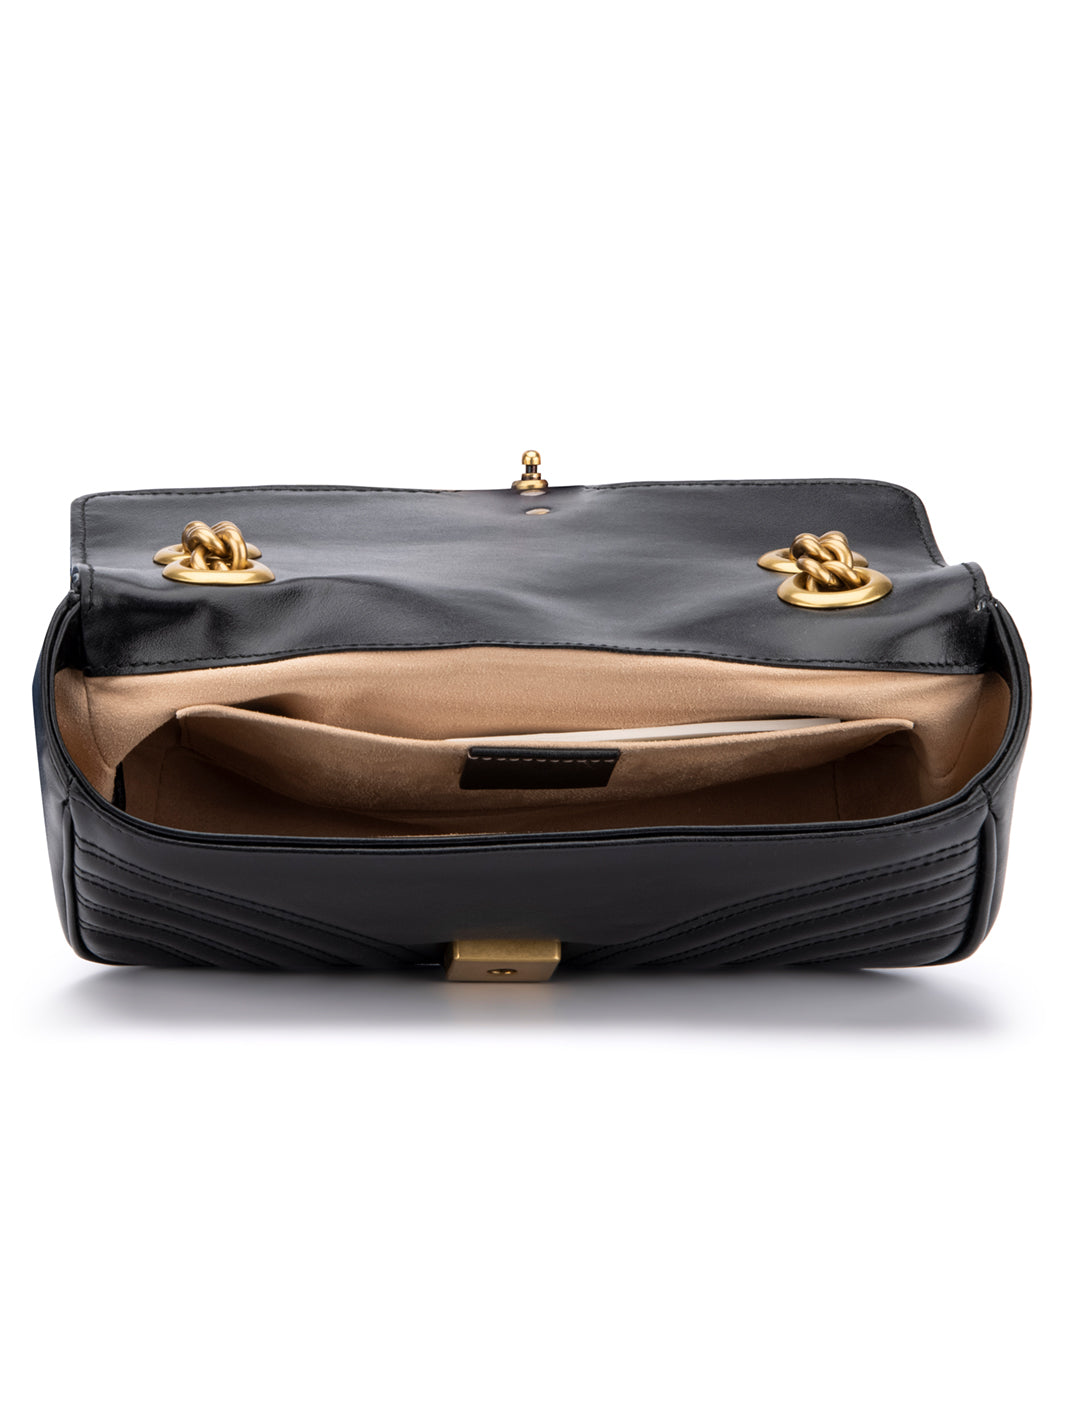 GG Marmont Matelasse Mini Bag – Lord & Taylor